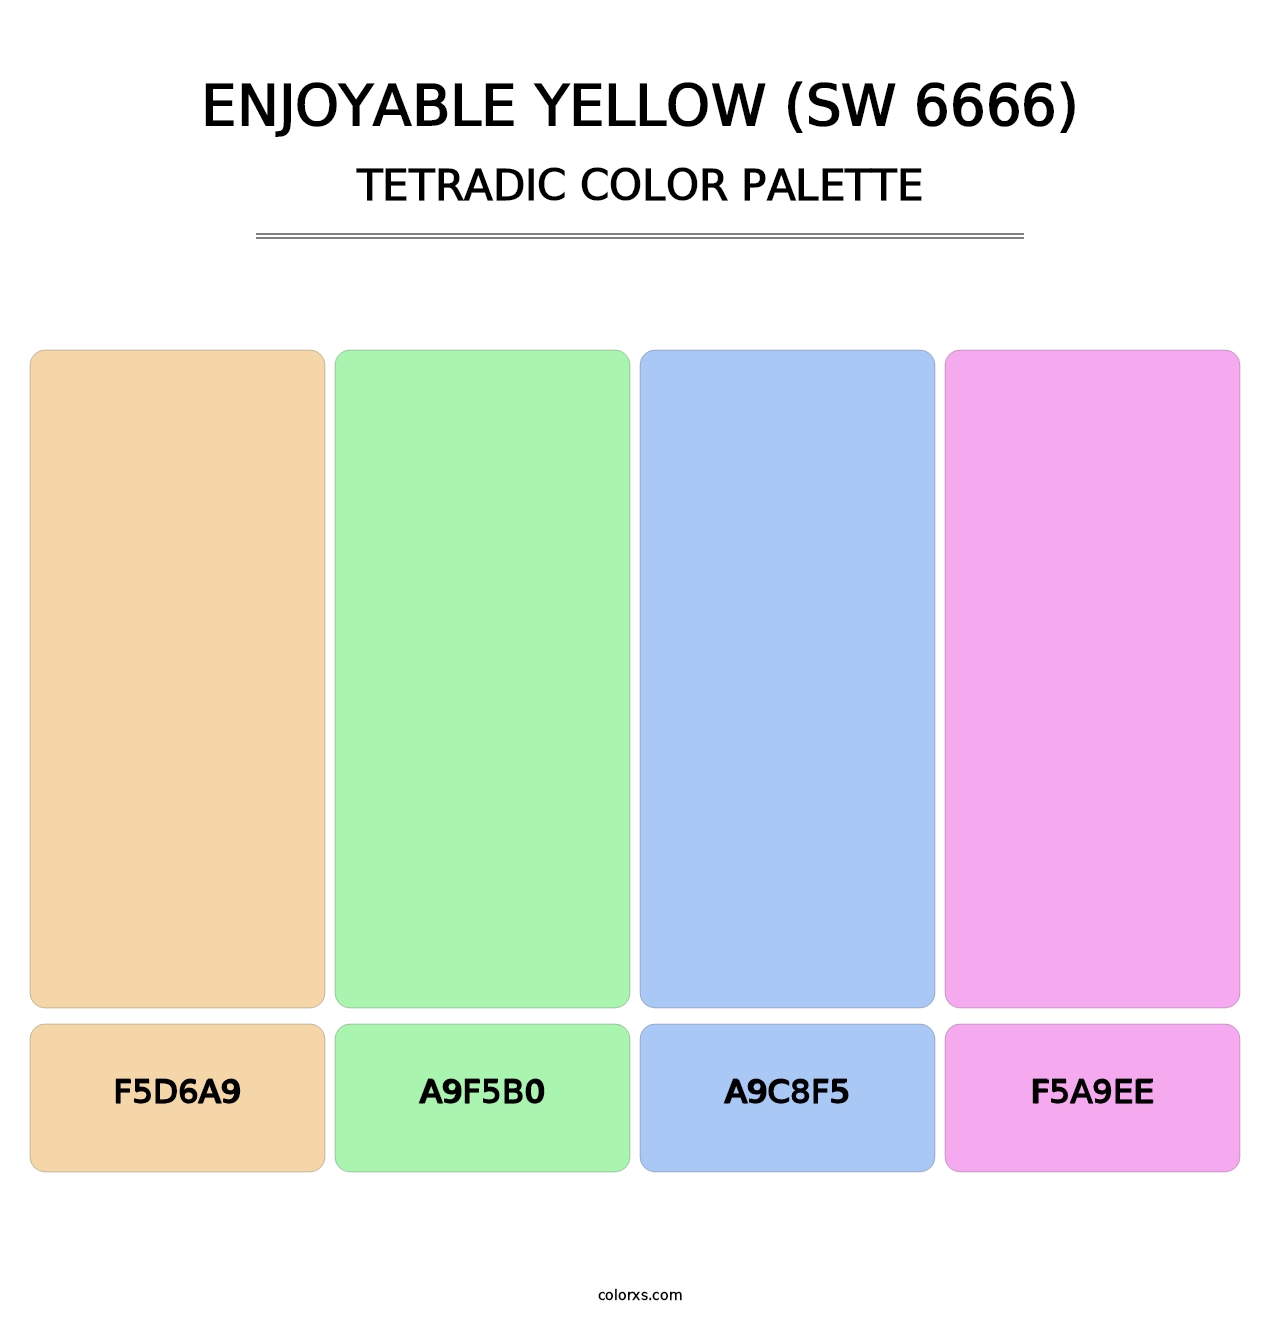 Enjoyable Yellow (SW 6666) - Tetradic Color Palette